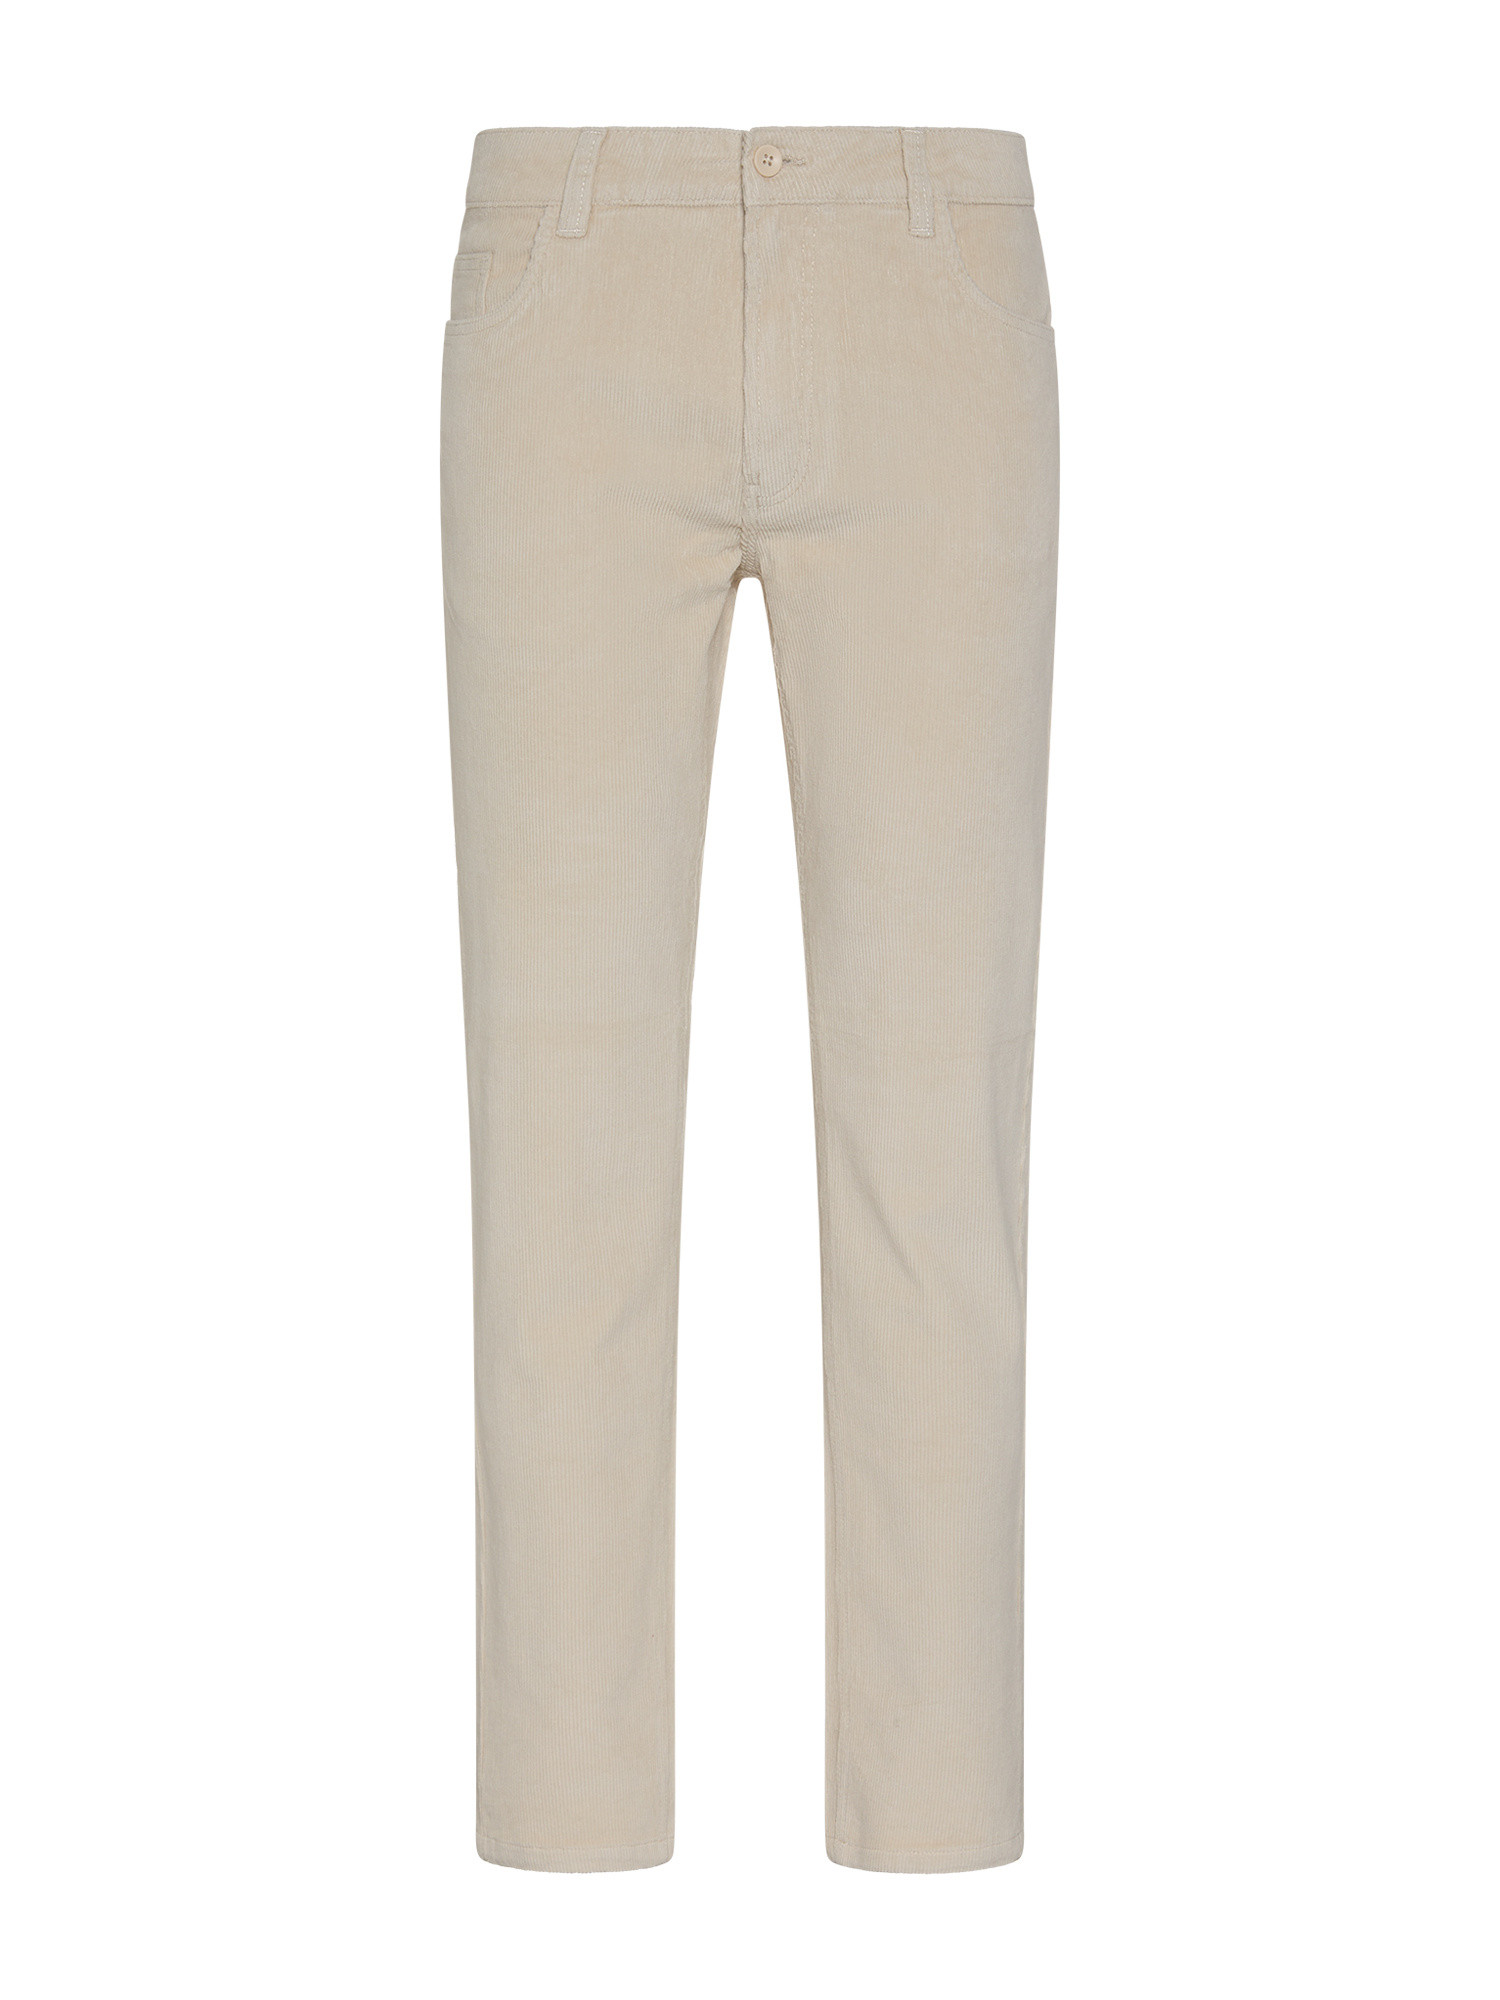 JCT - Pantaloni slim fit in velluto, White Cream, large image number 0